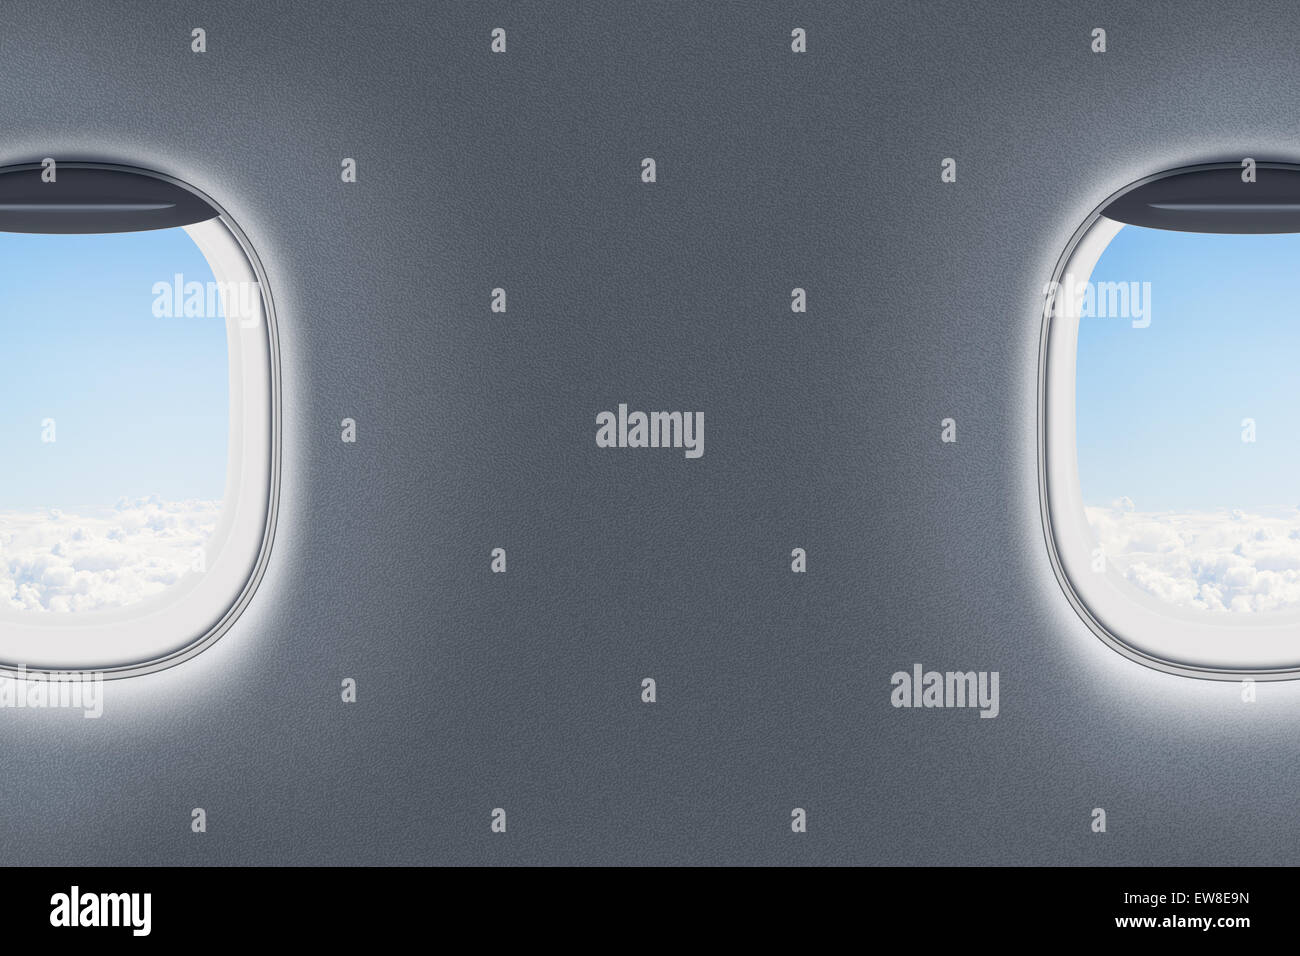 airplane or jet windows interior Stock Photo